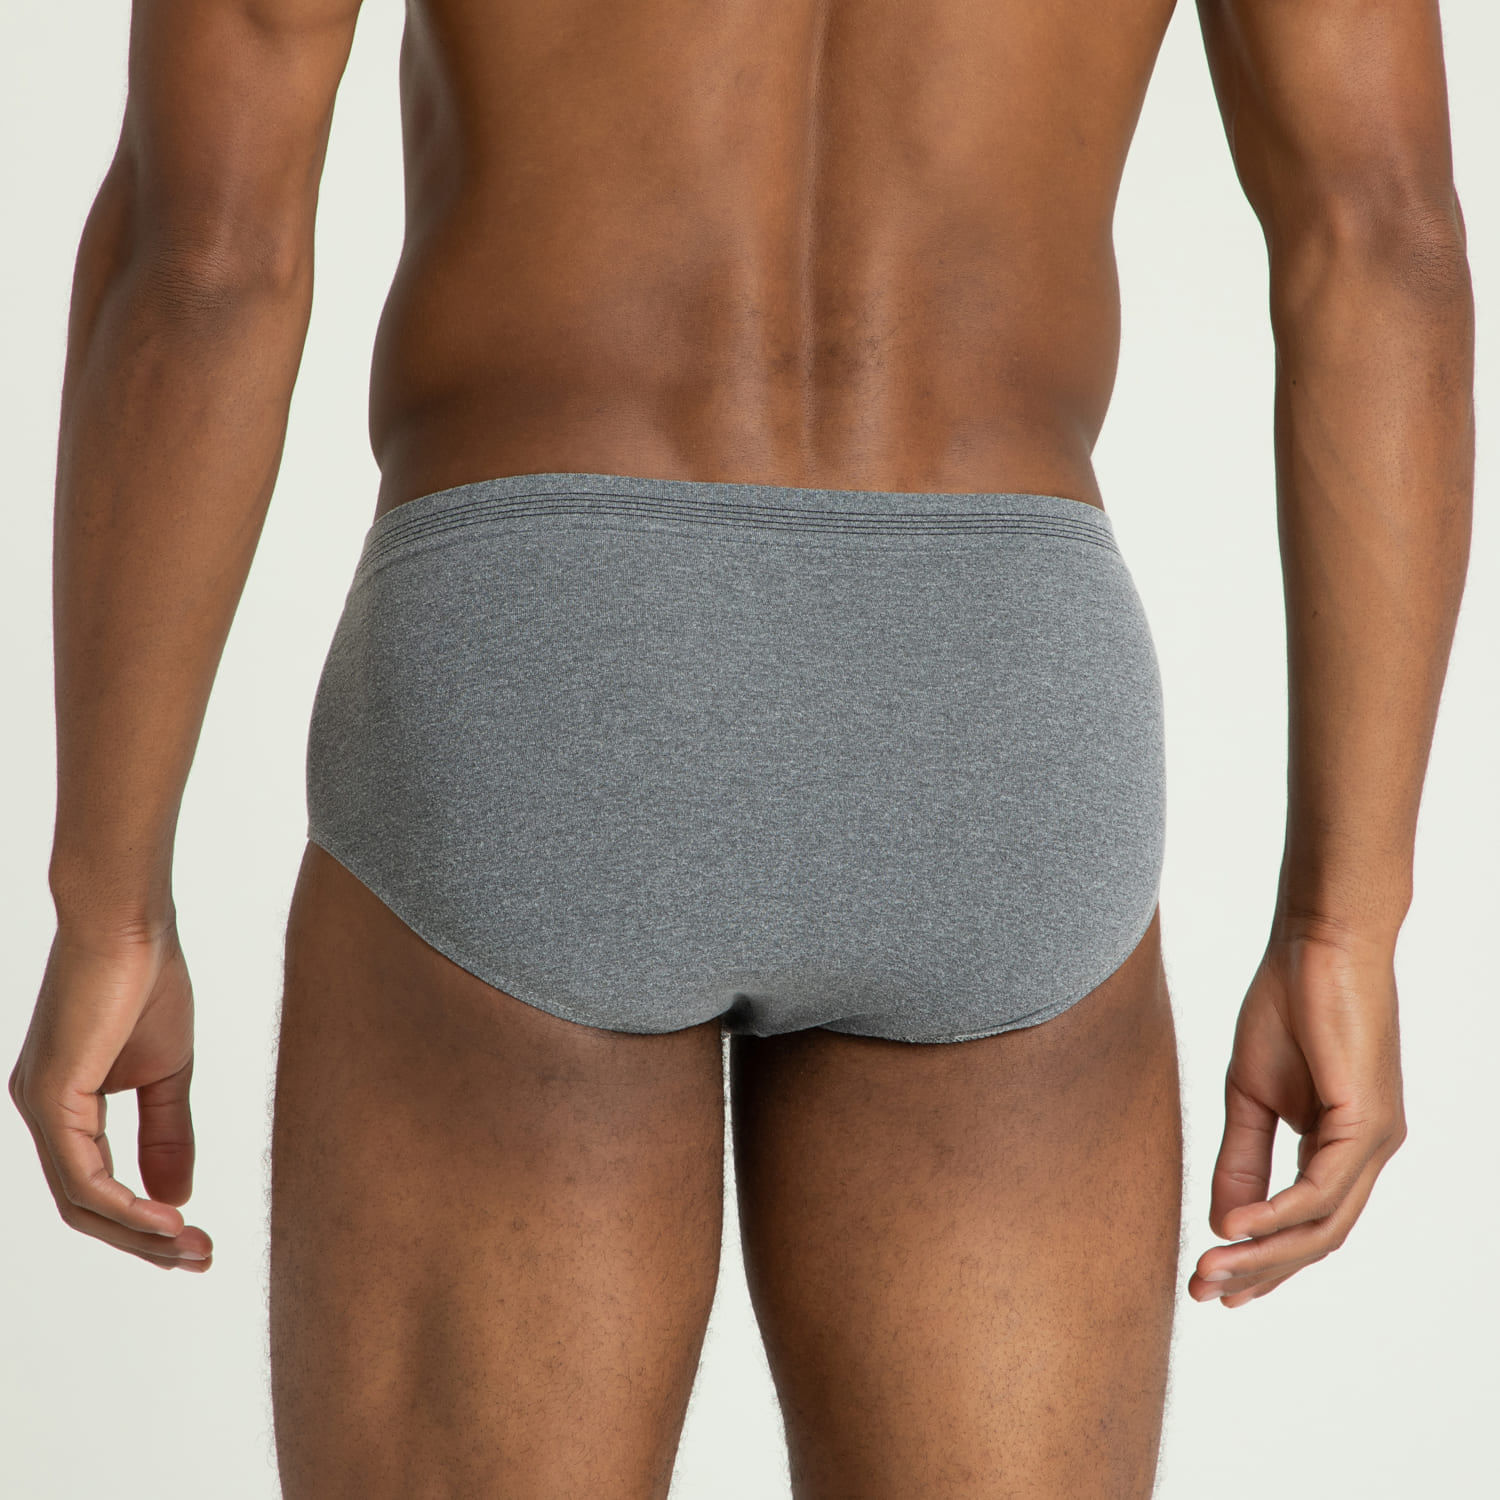 Underwear Masculina: Cuecas, Meias e Undershirts